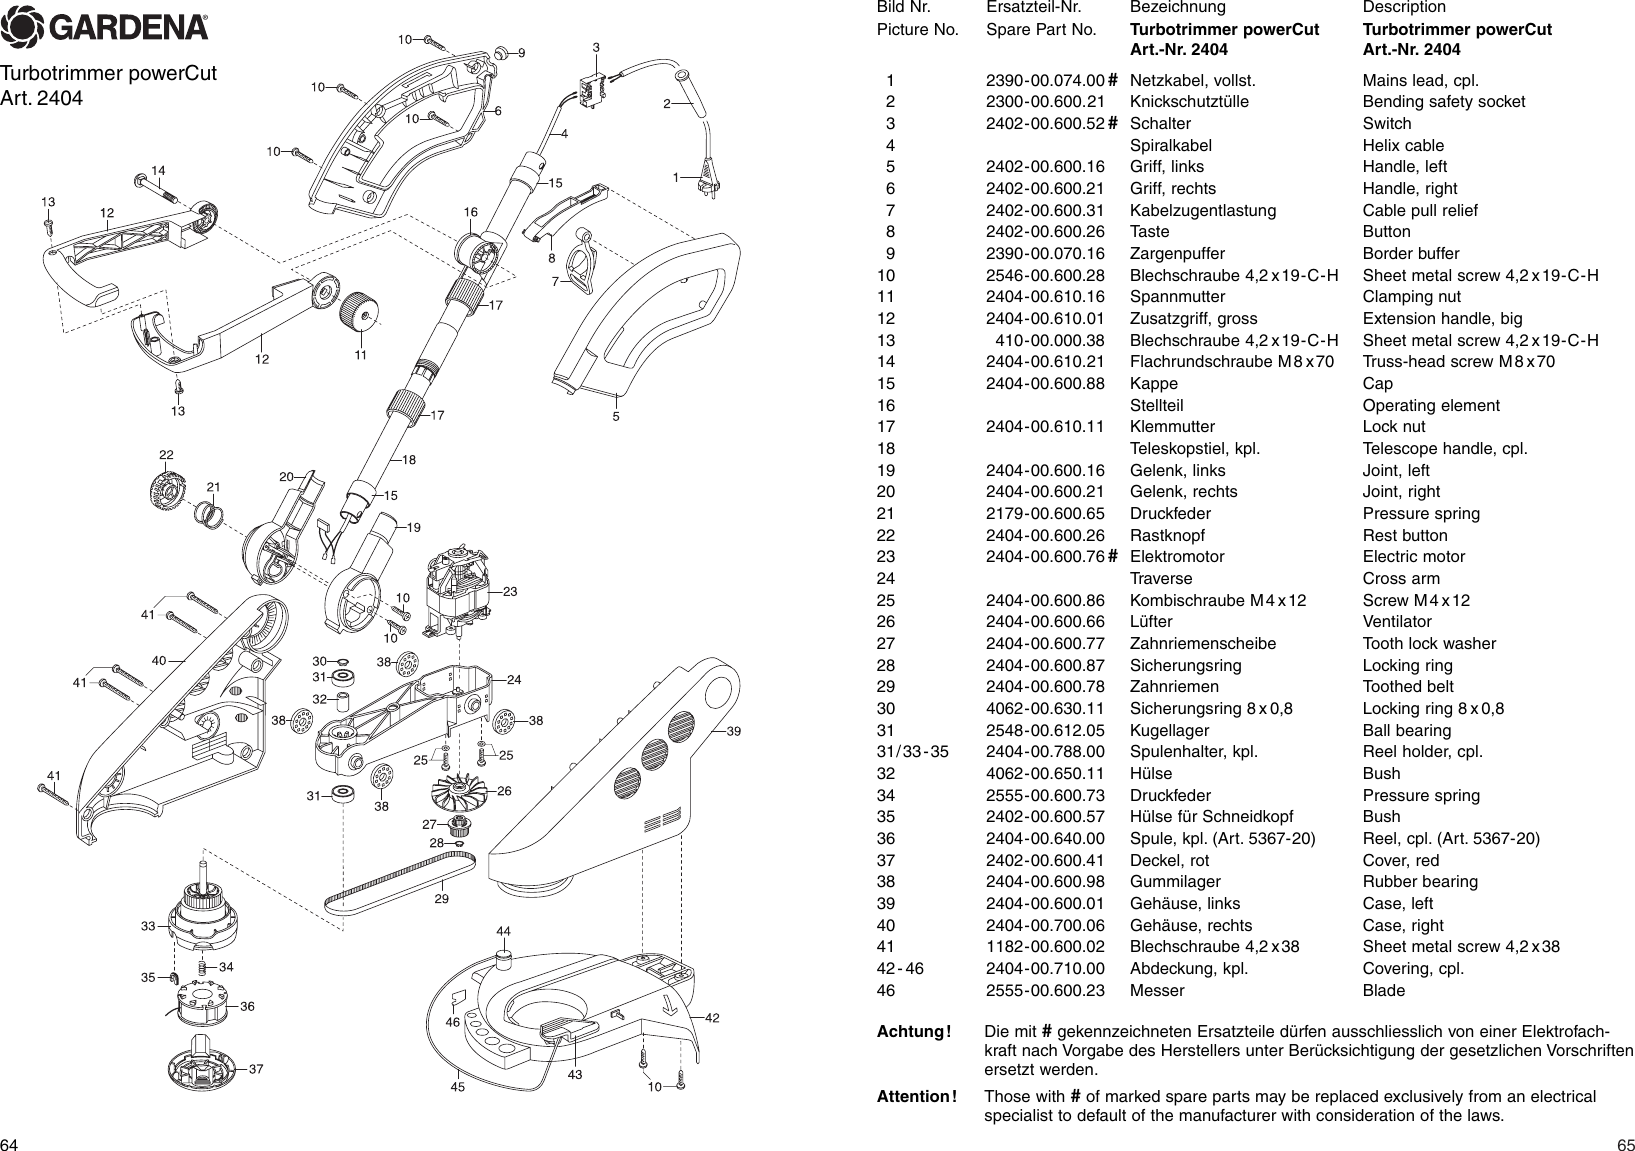 Page 7 of 8 - Gardena Gardena-Lawn-Mower-Users-Manual- 2404-20.960.04_01.12.2003  Gardena-lawn-mower-users-manual